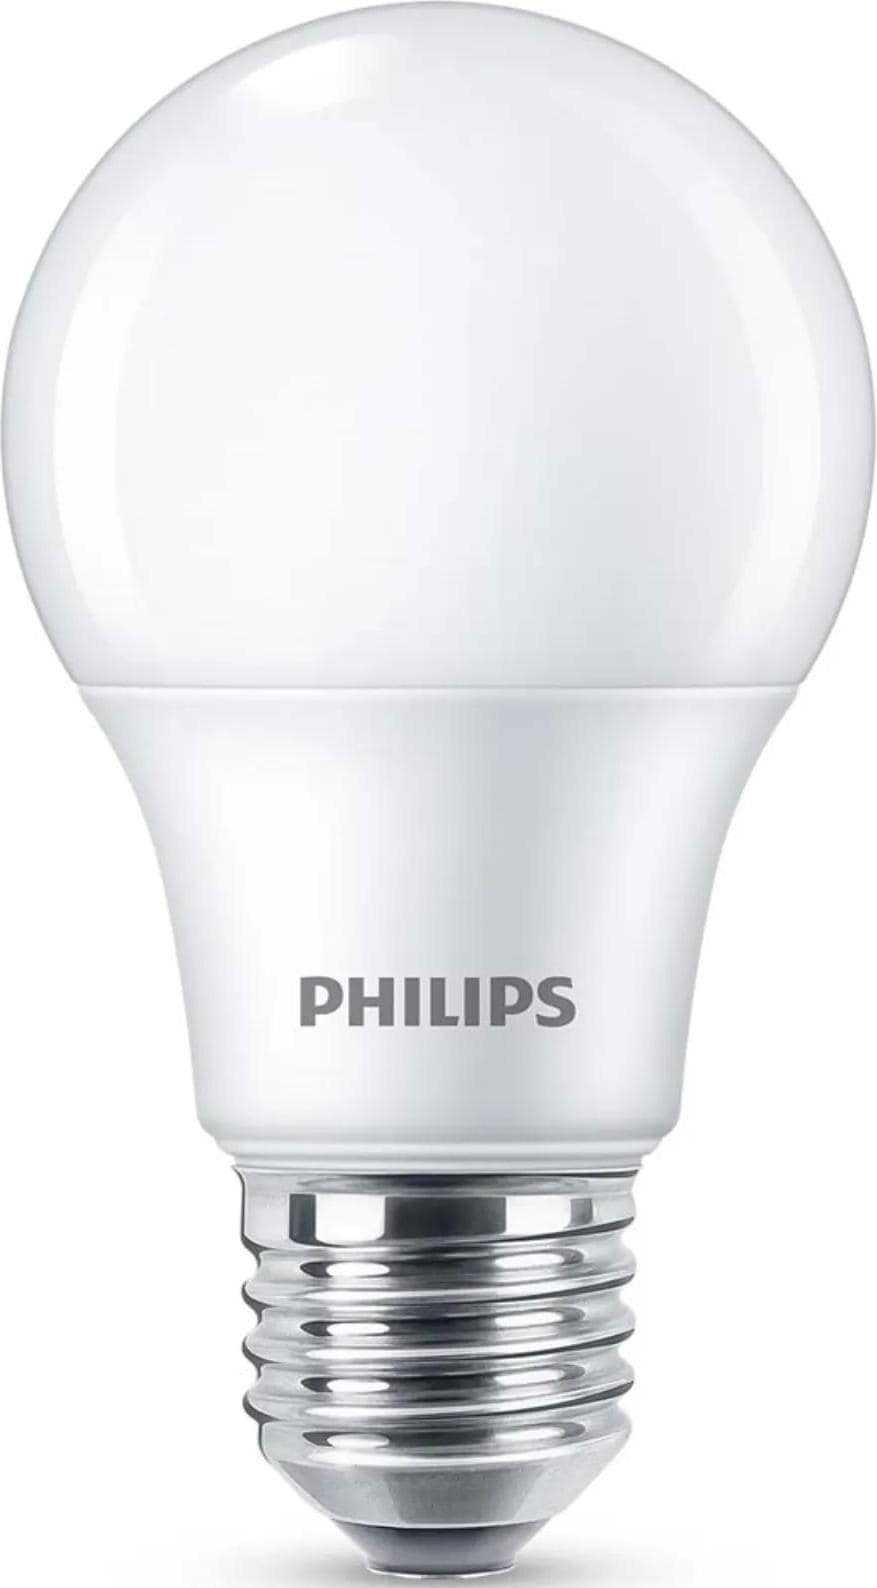 Philips, Leuchtmittel, Lampe (E27, 8 W, 806 lm, 6 x, F)